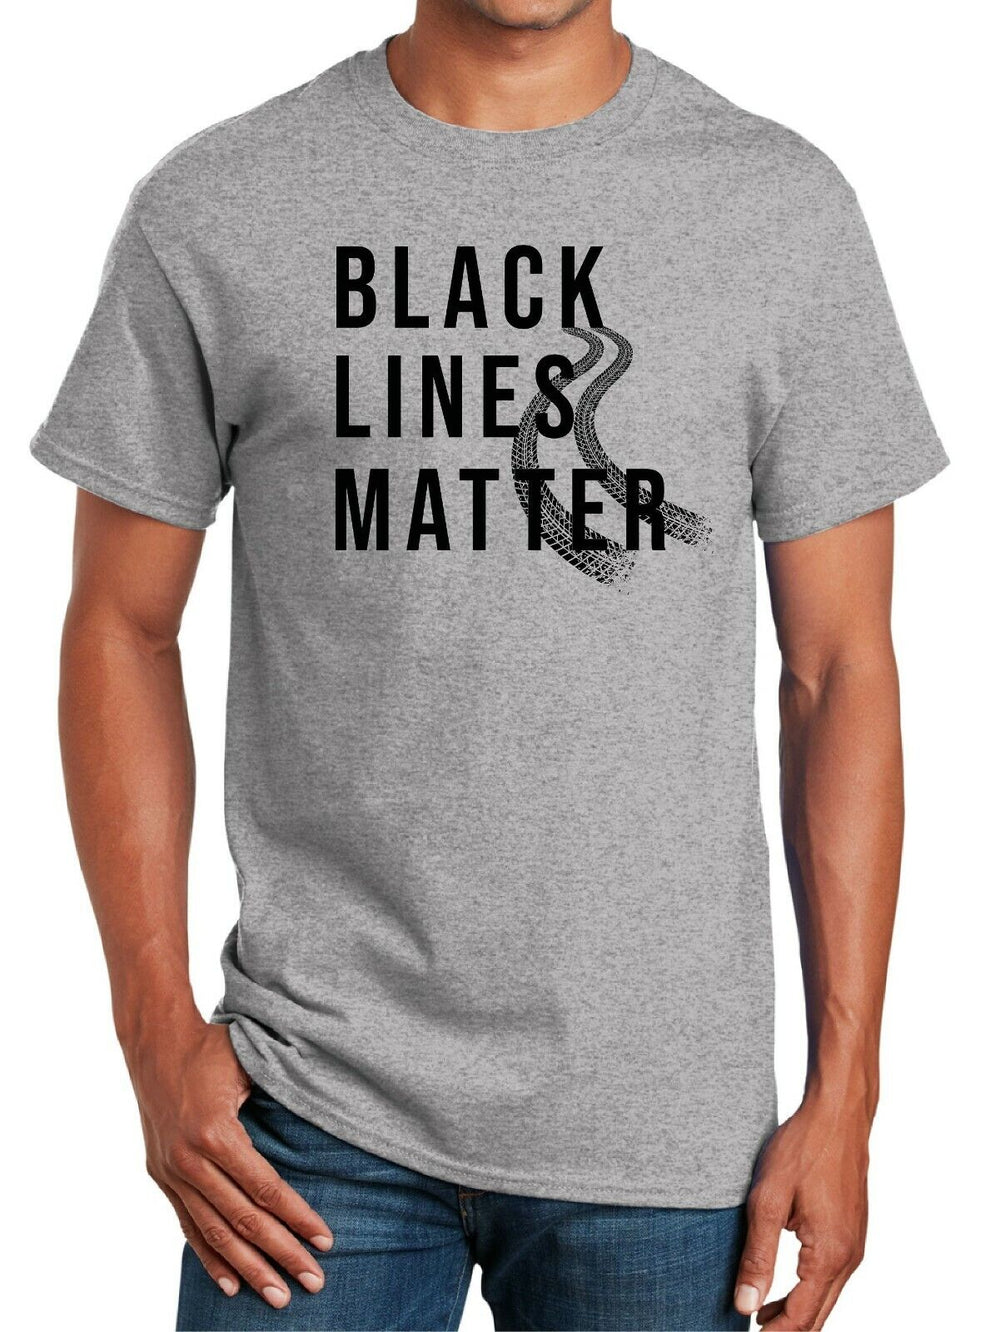 Black Lines Matter T-Shirt SPORT GRAY, Car Guy Gift, Car Enthusiast, Burnout Car